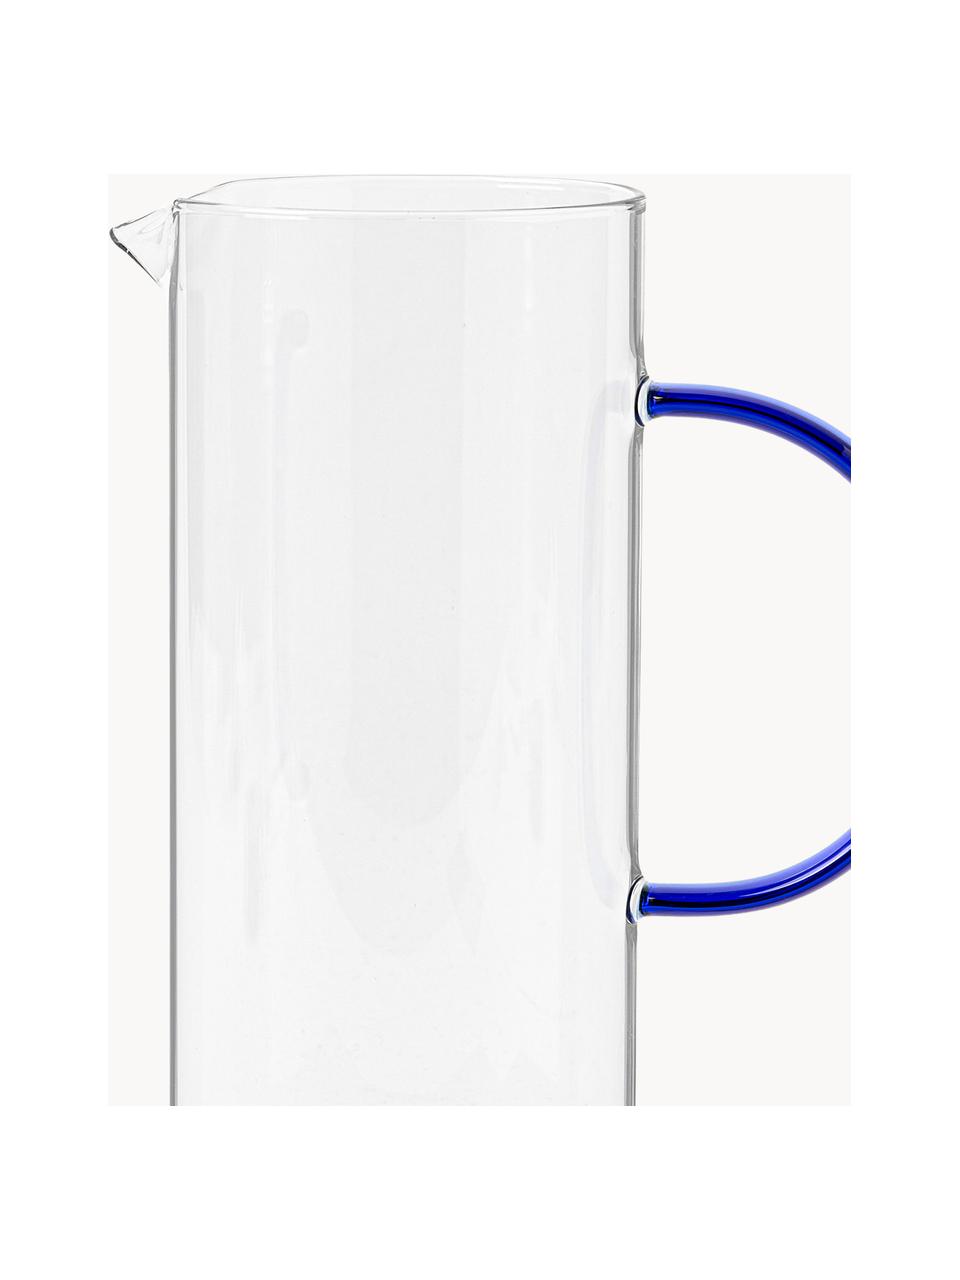 Waterkaraf Torino uit borosilicaatglas, 1.1 L, Borosilicaatglas, Transparant, koningsblauw, 1.1 L